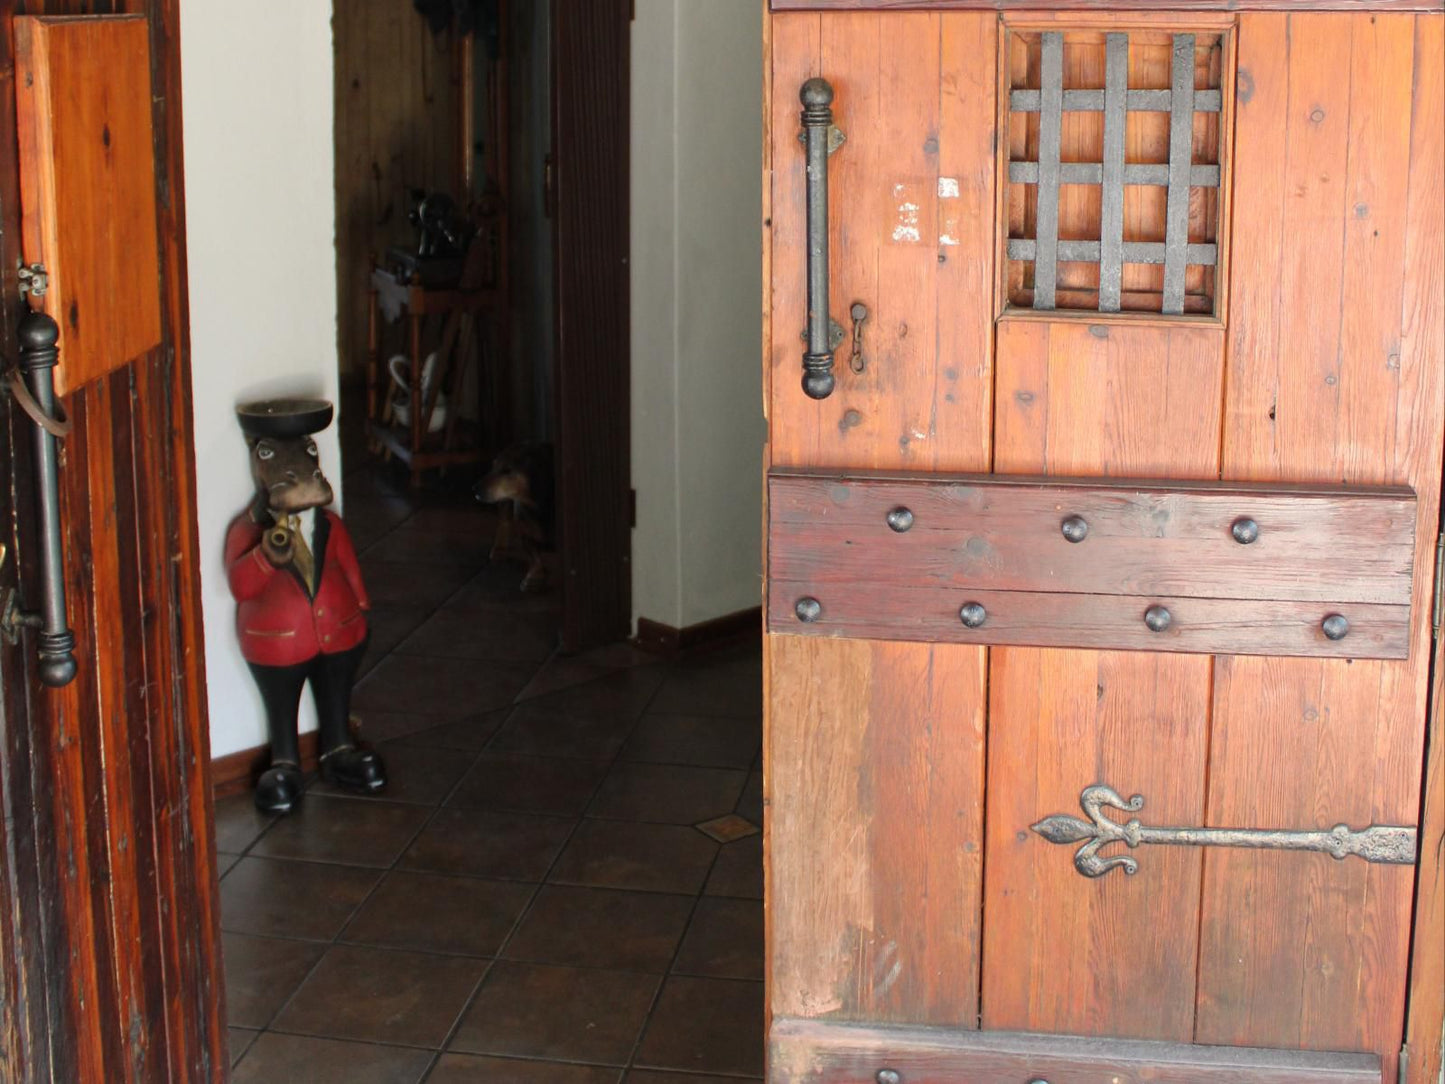 Wild Medlar Accommodation And Venue Nelspruit Mpumalanga South Africa Door, Architecture